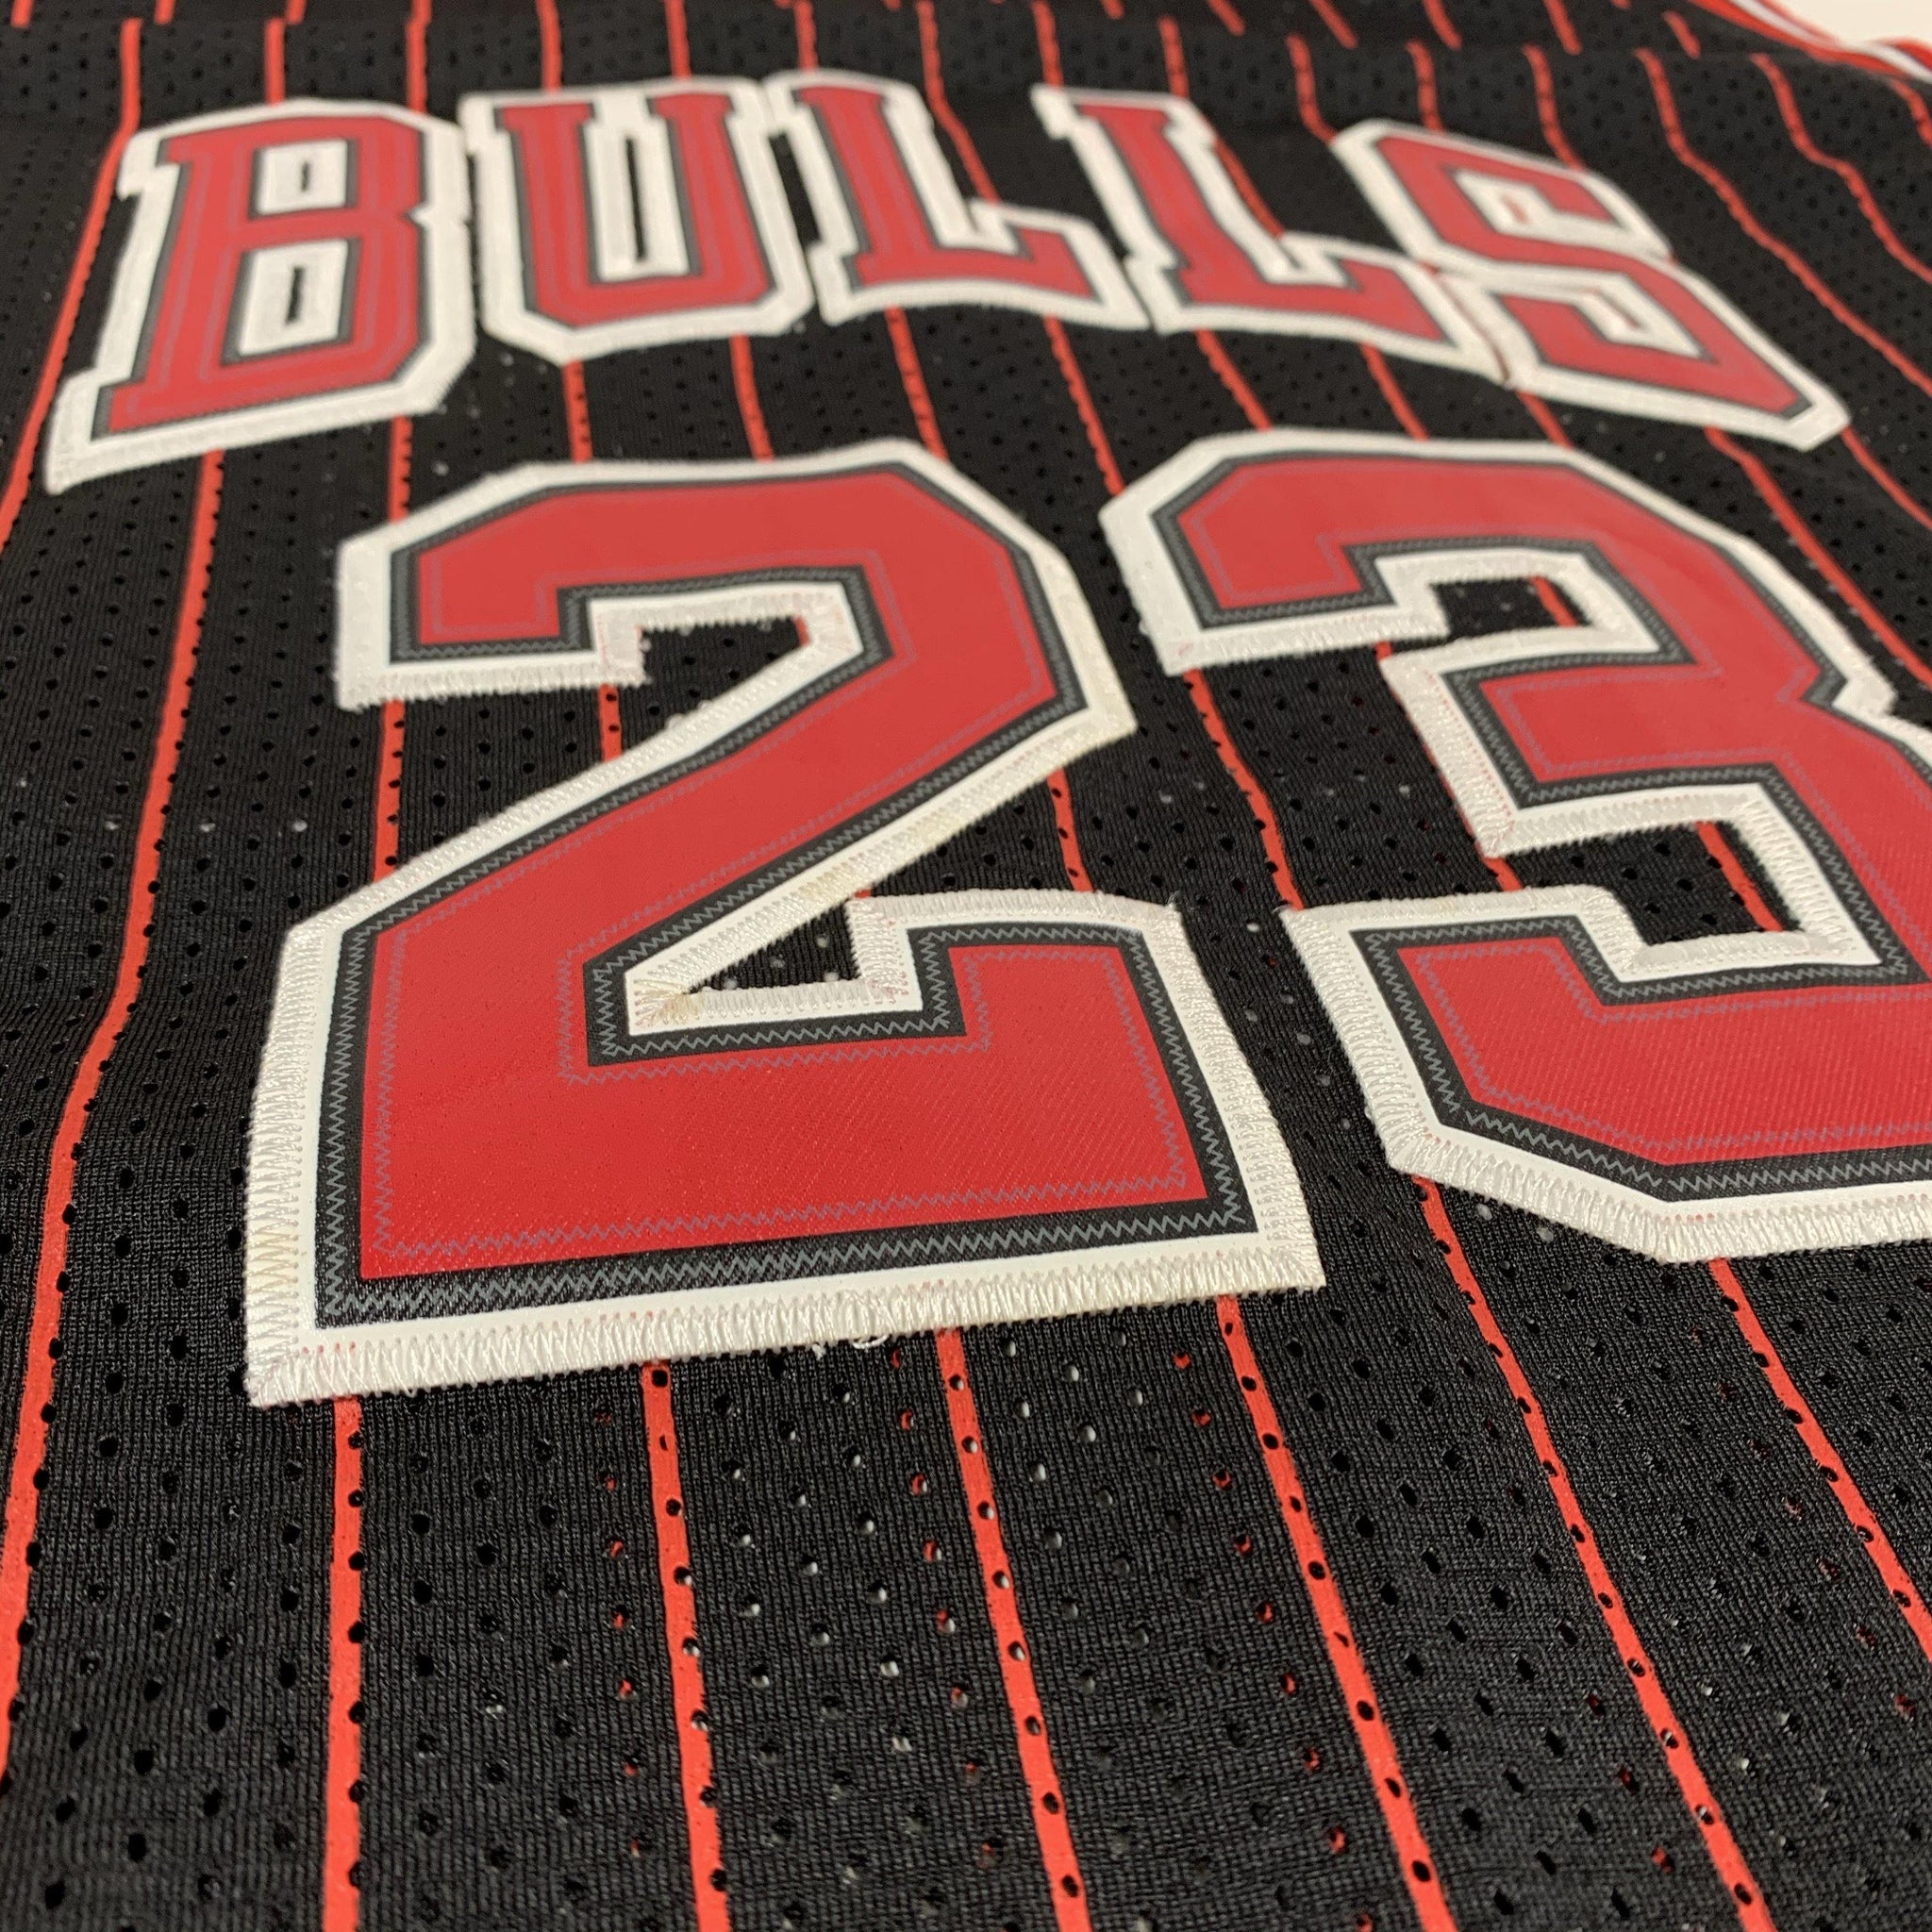 Joint Custody Vintage Michael Jordan “Chicago Bulls” Nike Jersey